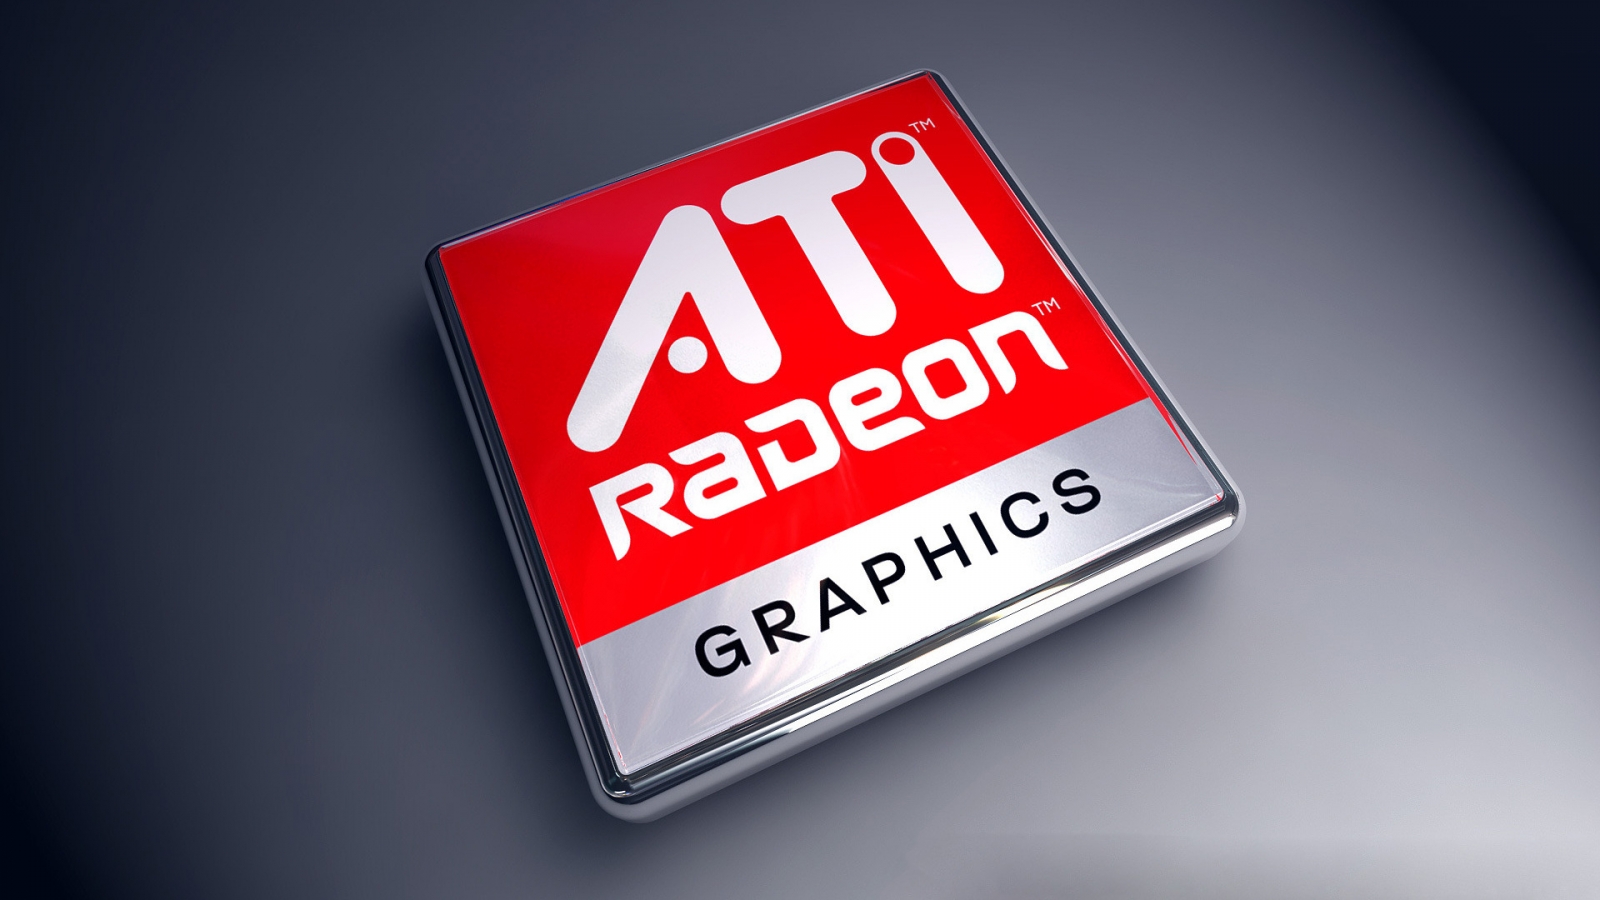 ATI Radeon Graphics for 1600 x 900 HDTV resolution